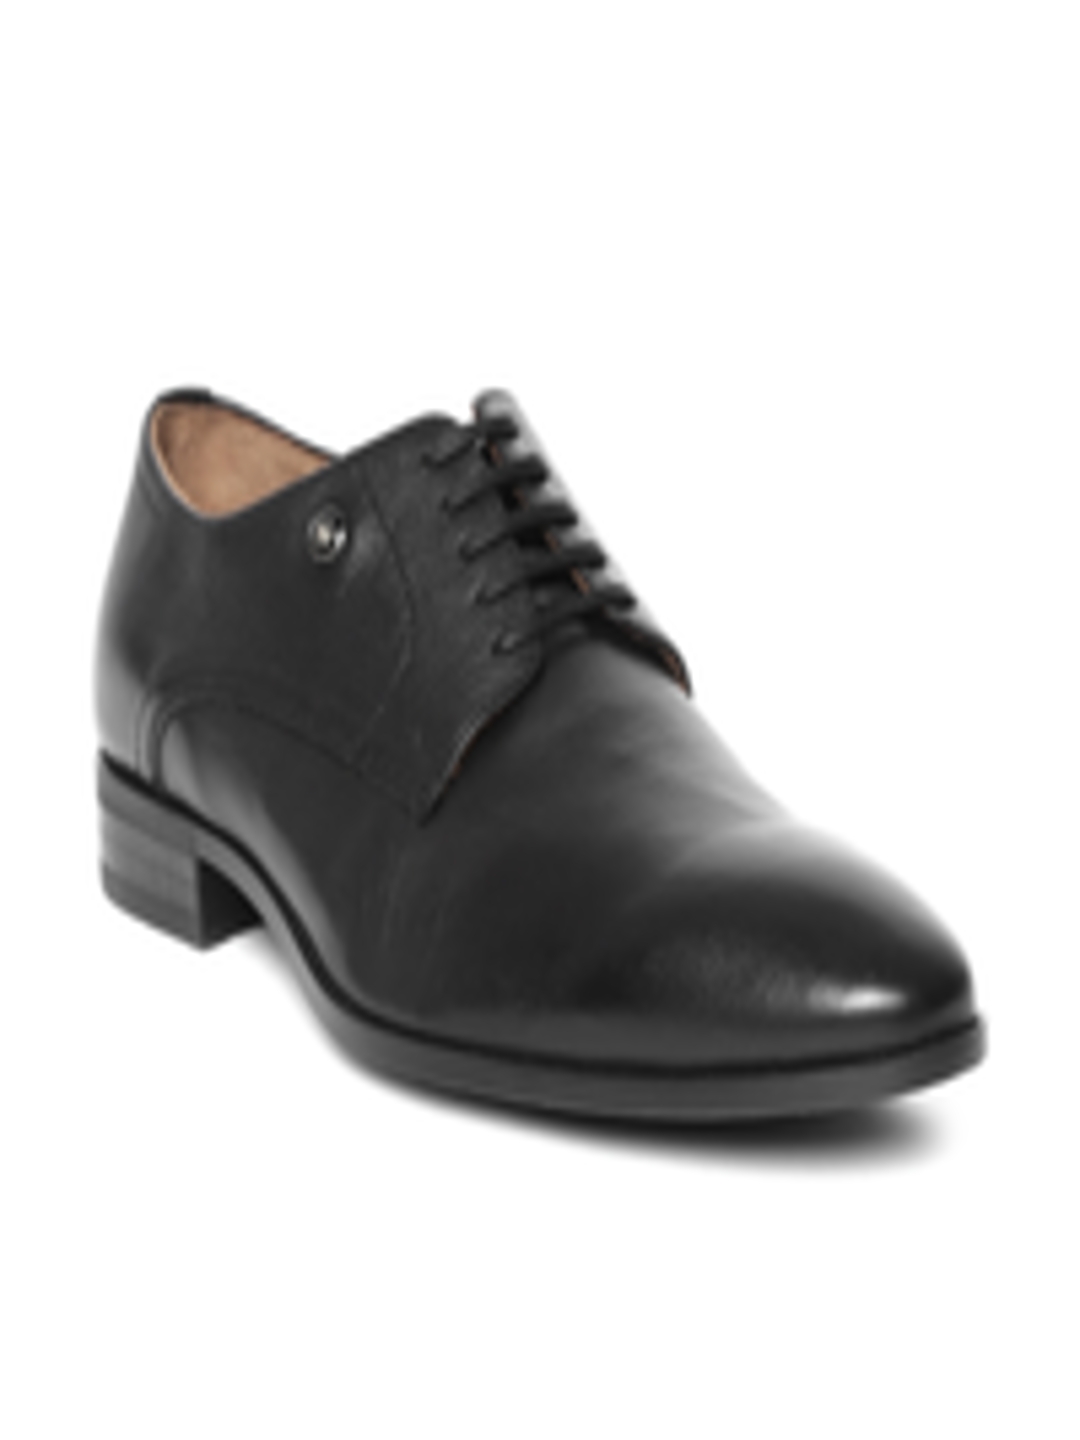 Buy Louis Philippe Men Black Leather Formal Derbys - Formal Shoes for Men 8456991 | Myntra